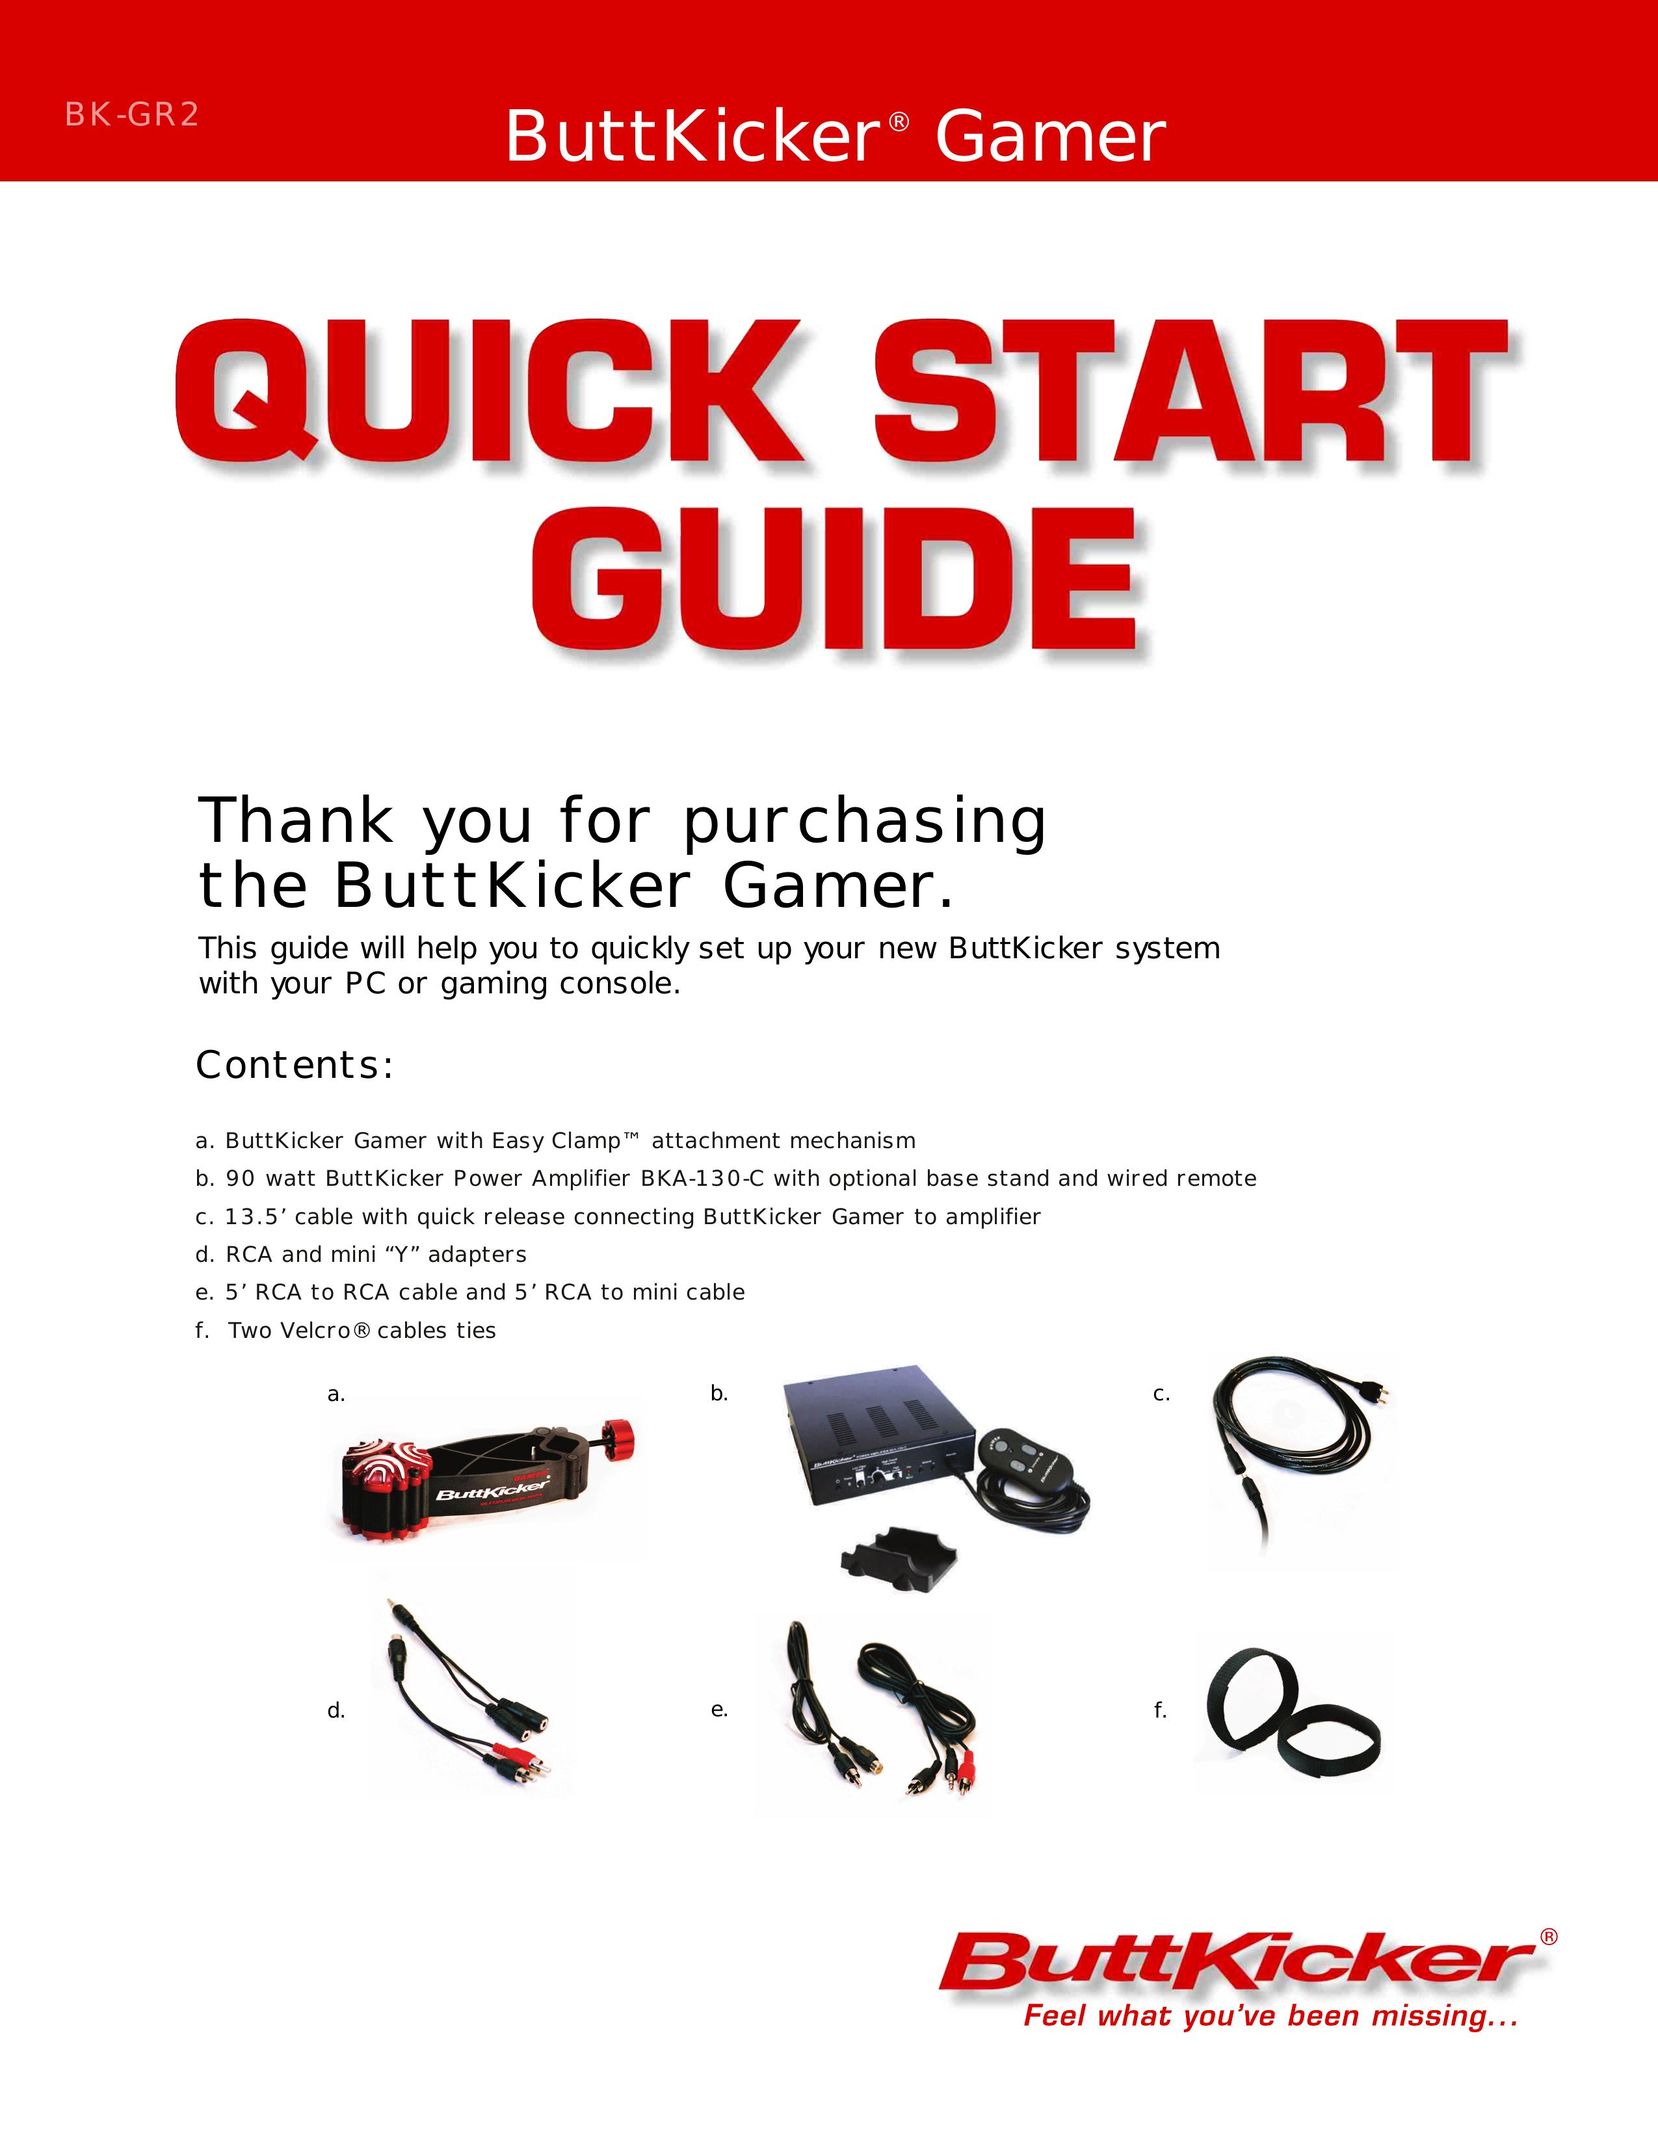 ButtKicker BK-GR2 Video Game Console User Manual